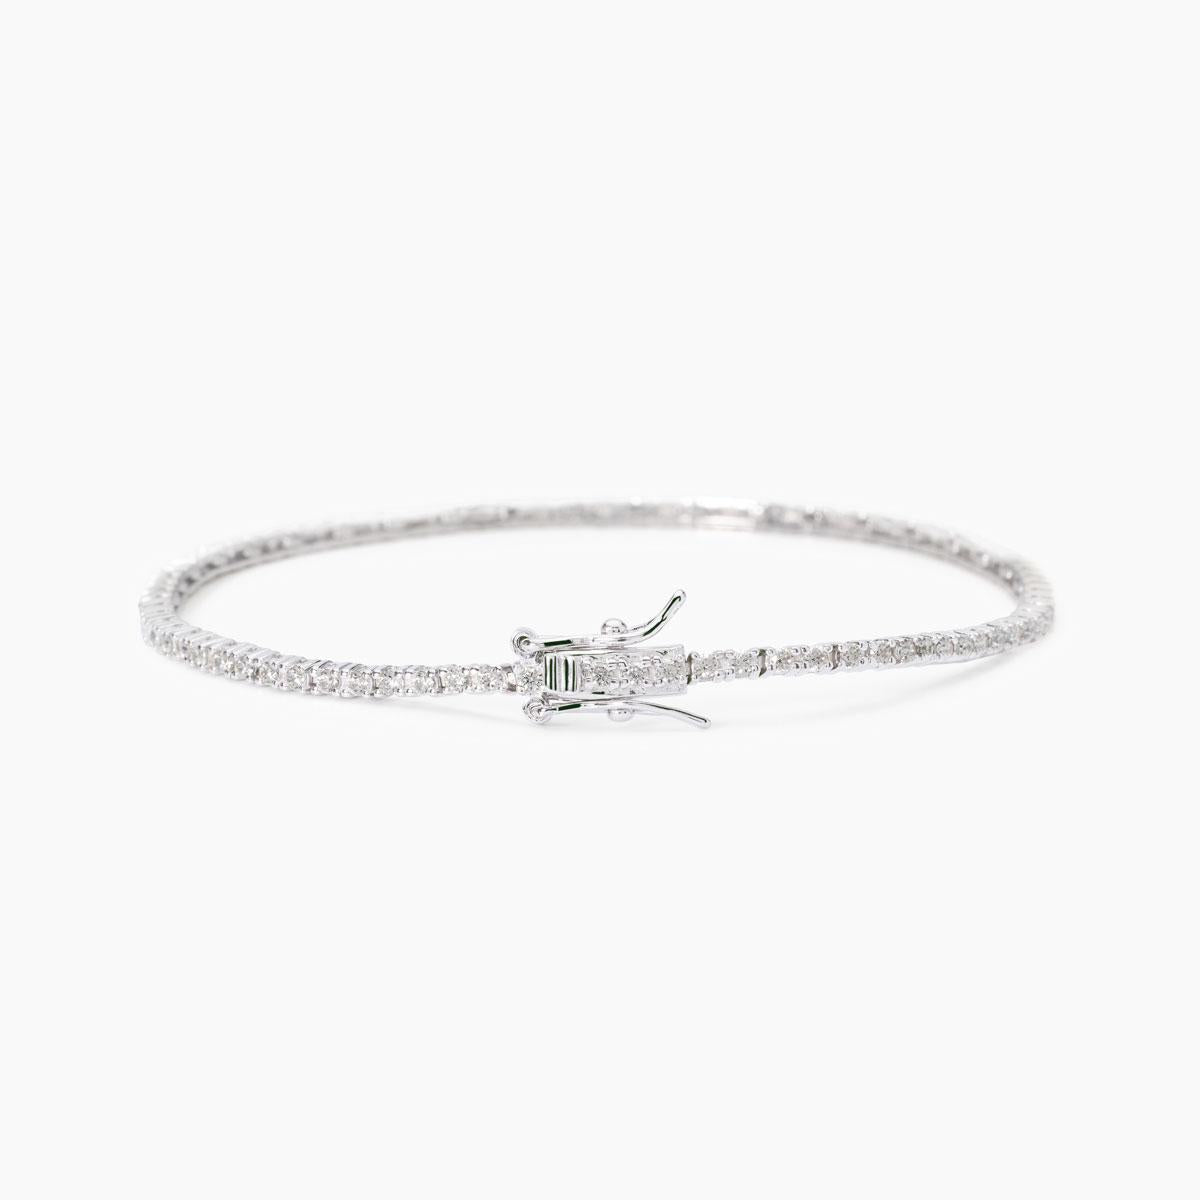 Mabina Woman - Silver tennis bracelet with zircons TENNIS CLUB - 533879-16